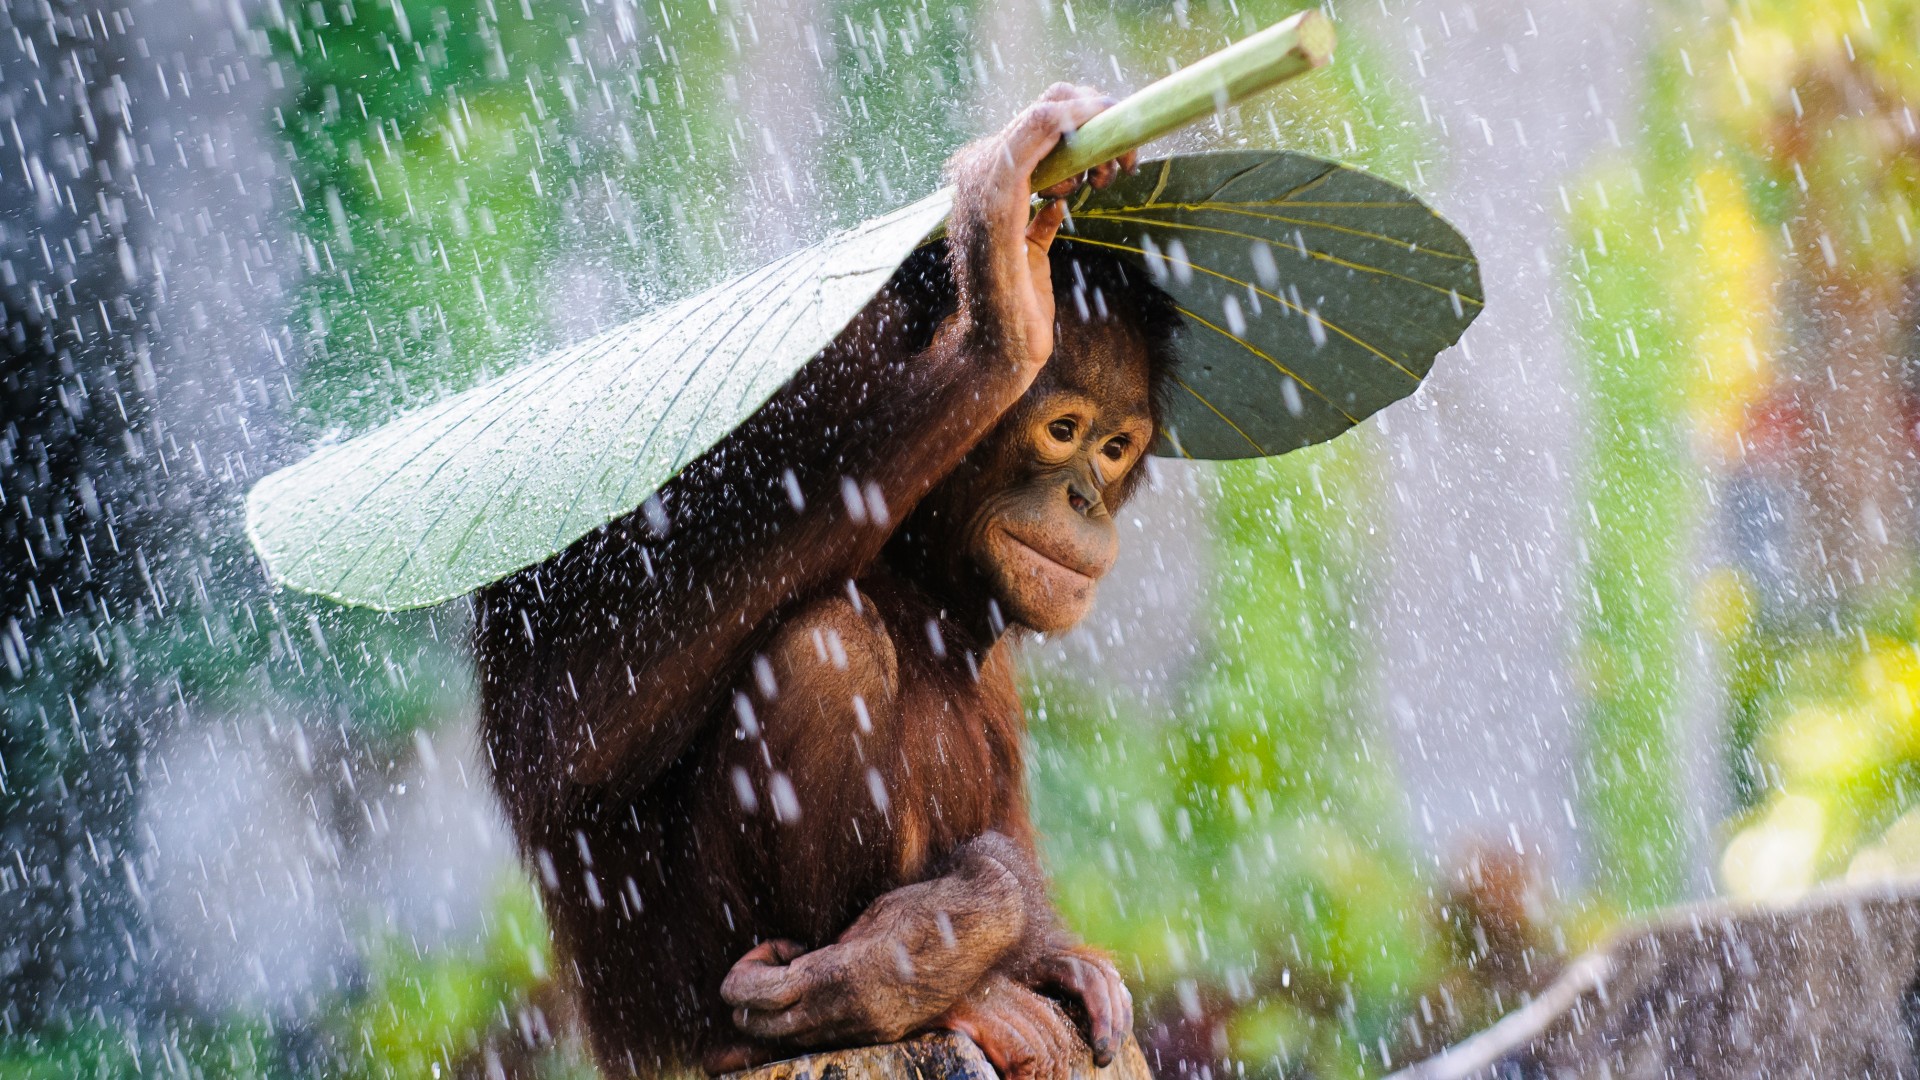 шмпанзе, конго, река, туризм, банановый лист, дождь, обезьяна, природа, животное, зеленые, Chimpanzee, Congo River, tourism, banana, leaves, rain, monkey, nature, animal, green (horizontal)